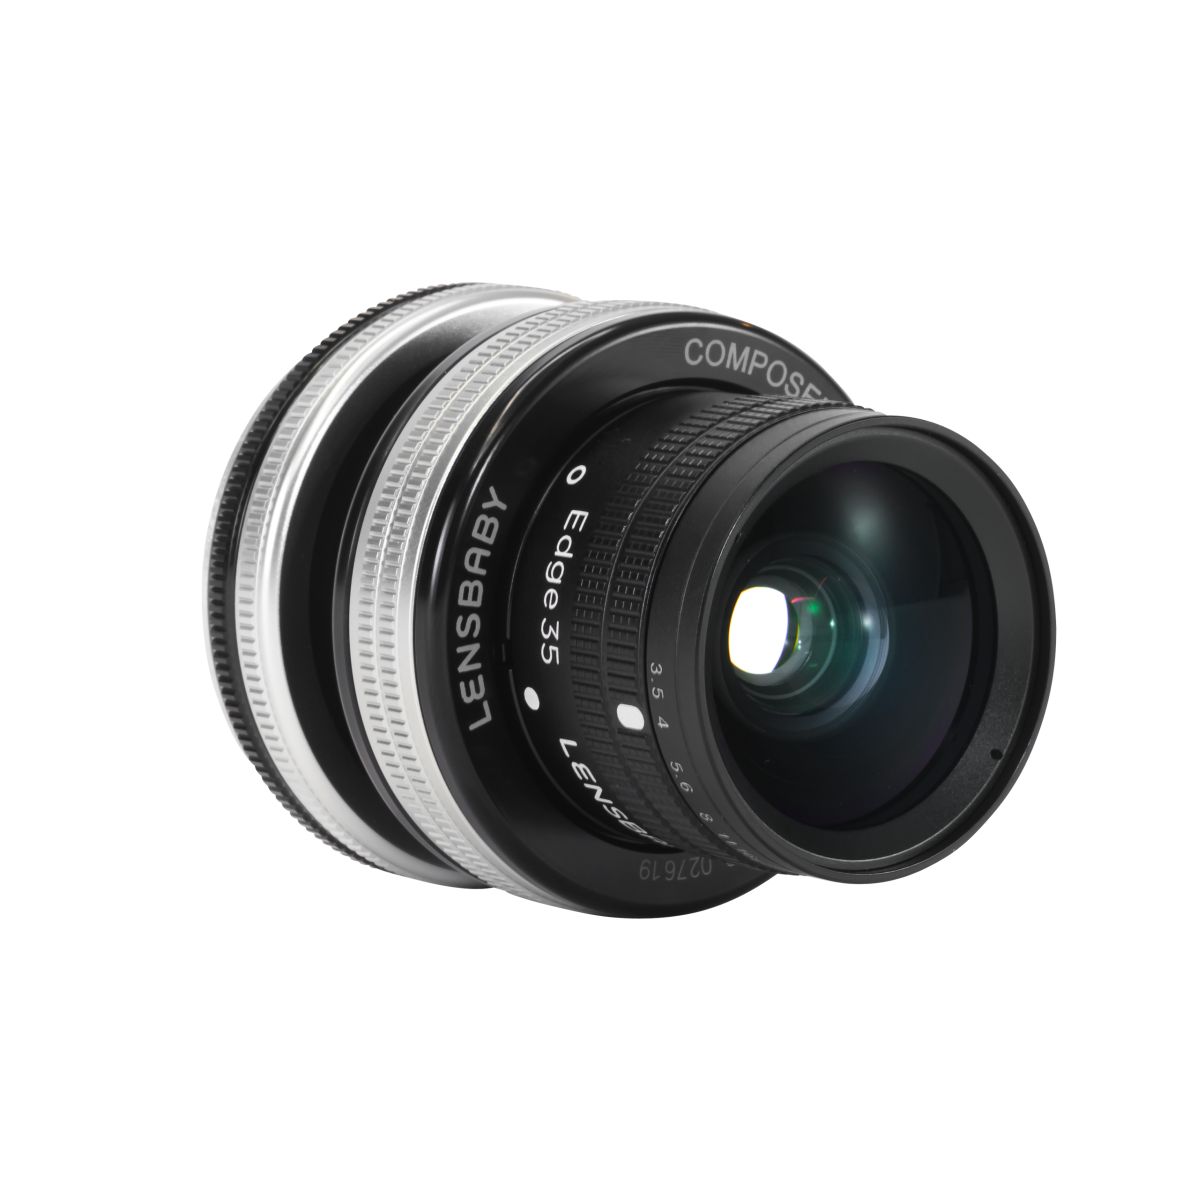 Lensbaby Composer Pro II Edge 35 Nikon F